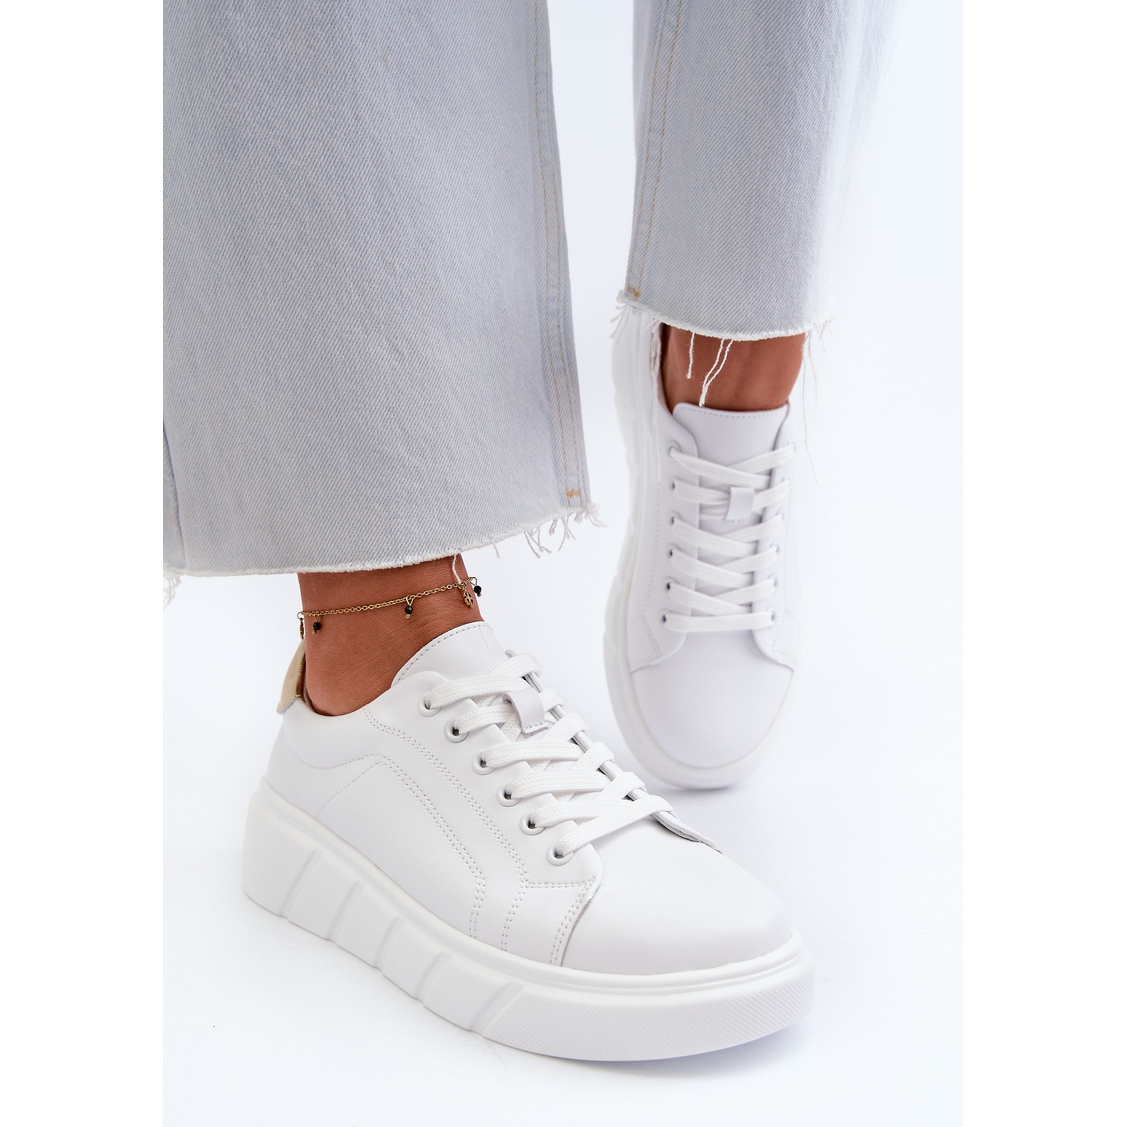 Women's Platform Leather Sneakers, White Danida | eBay